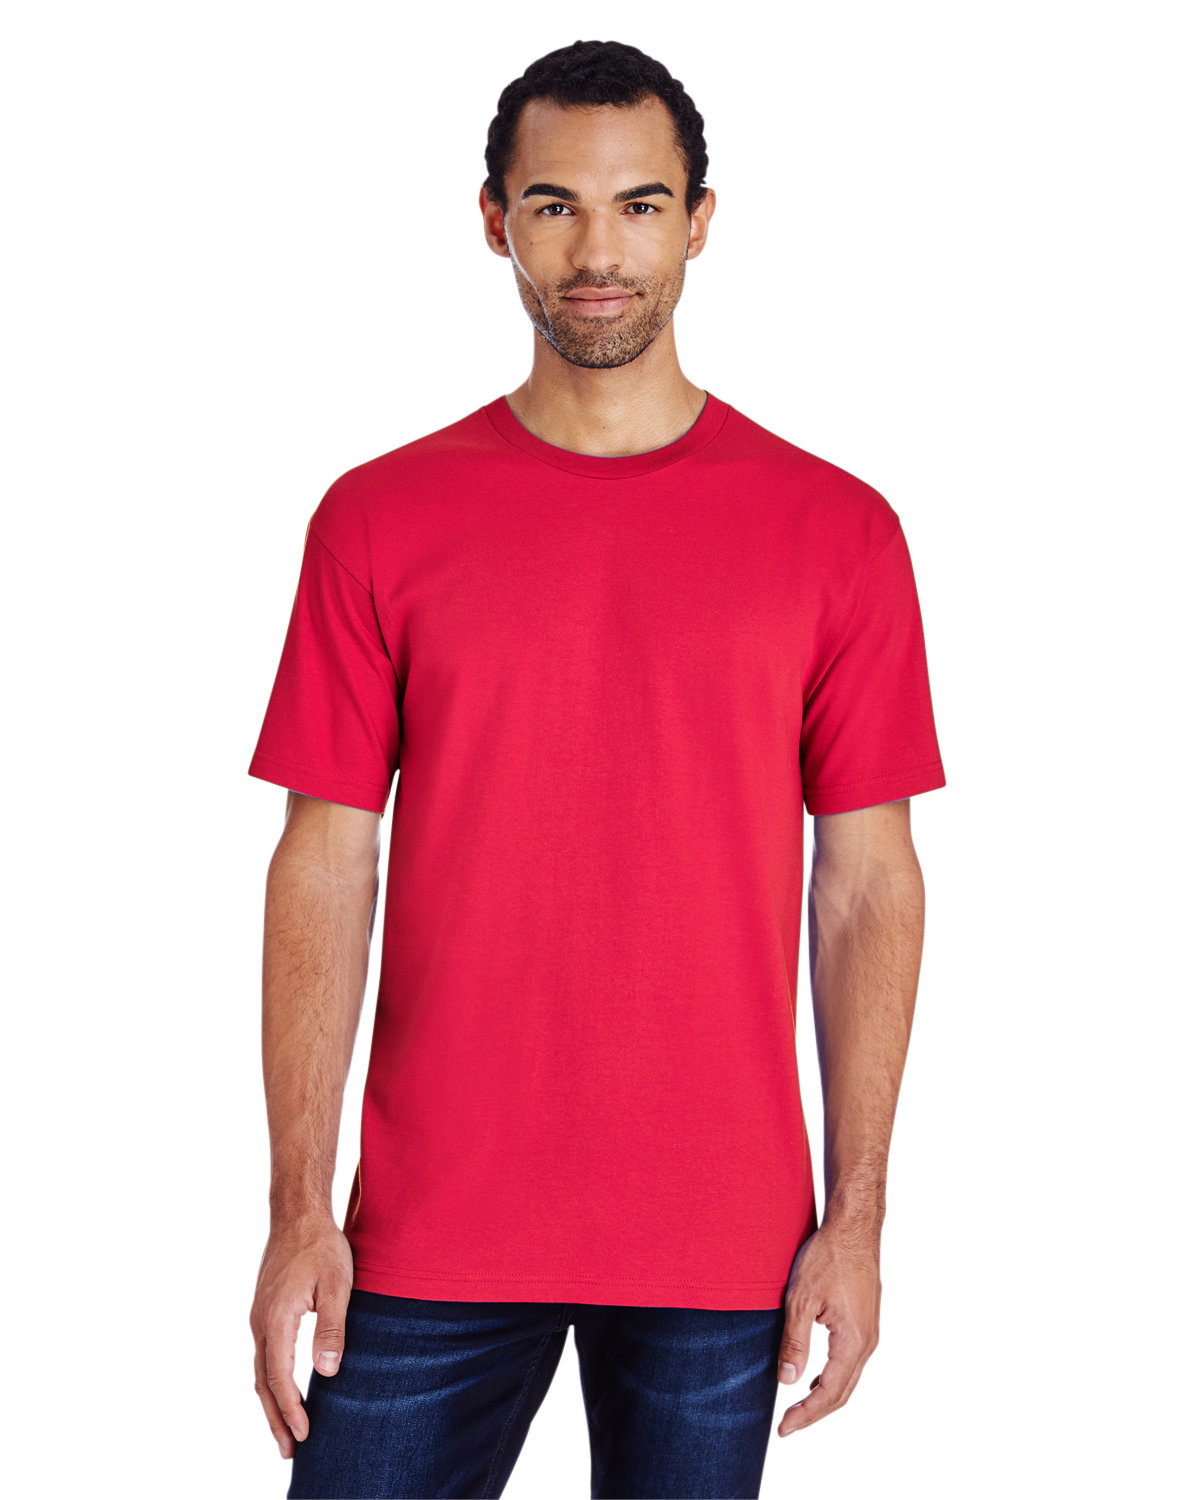 Gildan Hammer™ Adult T-Shirt SPRT SCARLET RED 